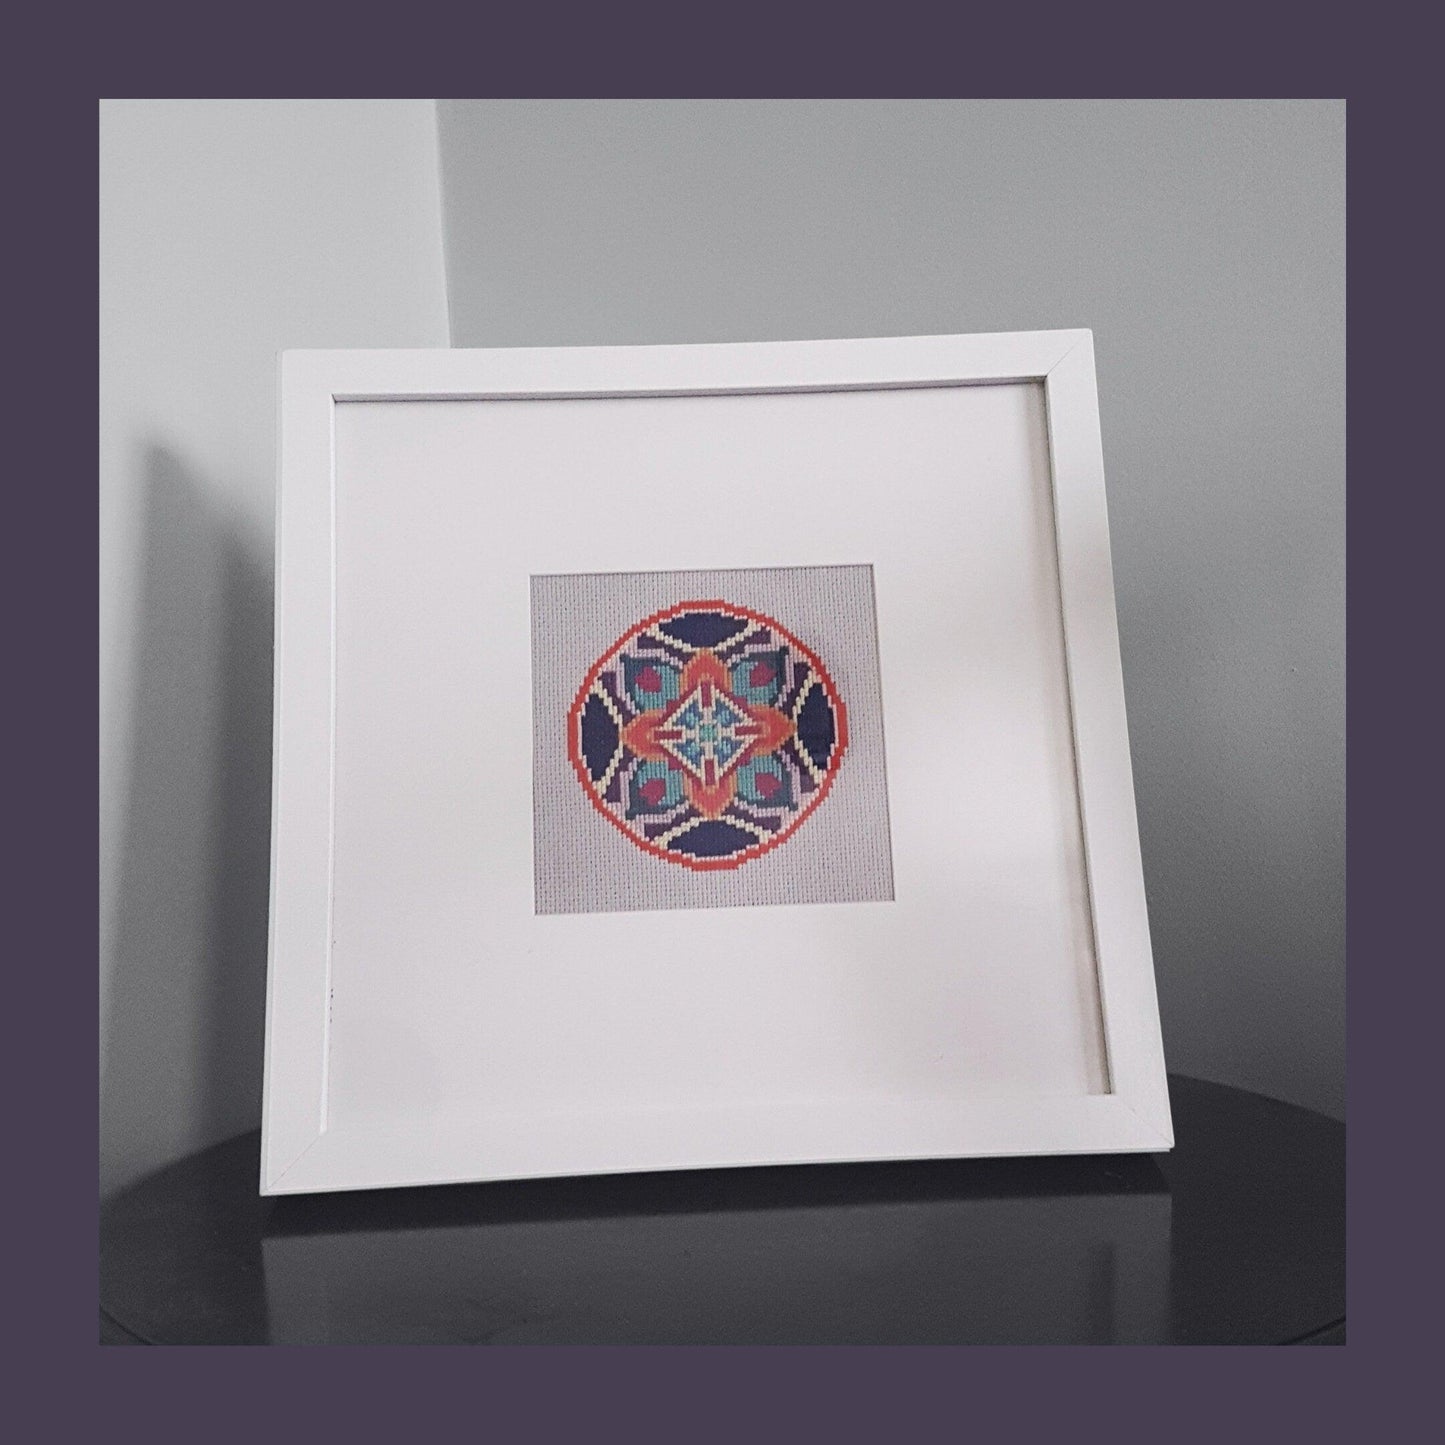 Mandala design, one of a kind, handmade embroidery